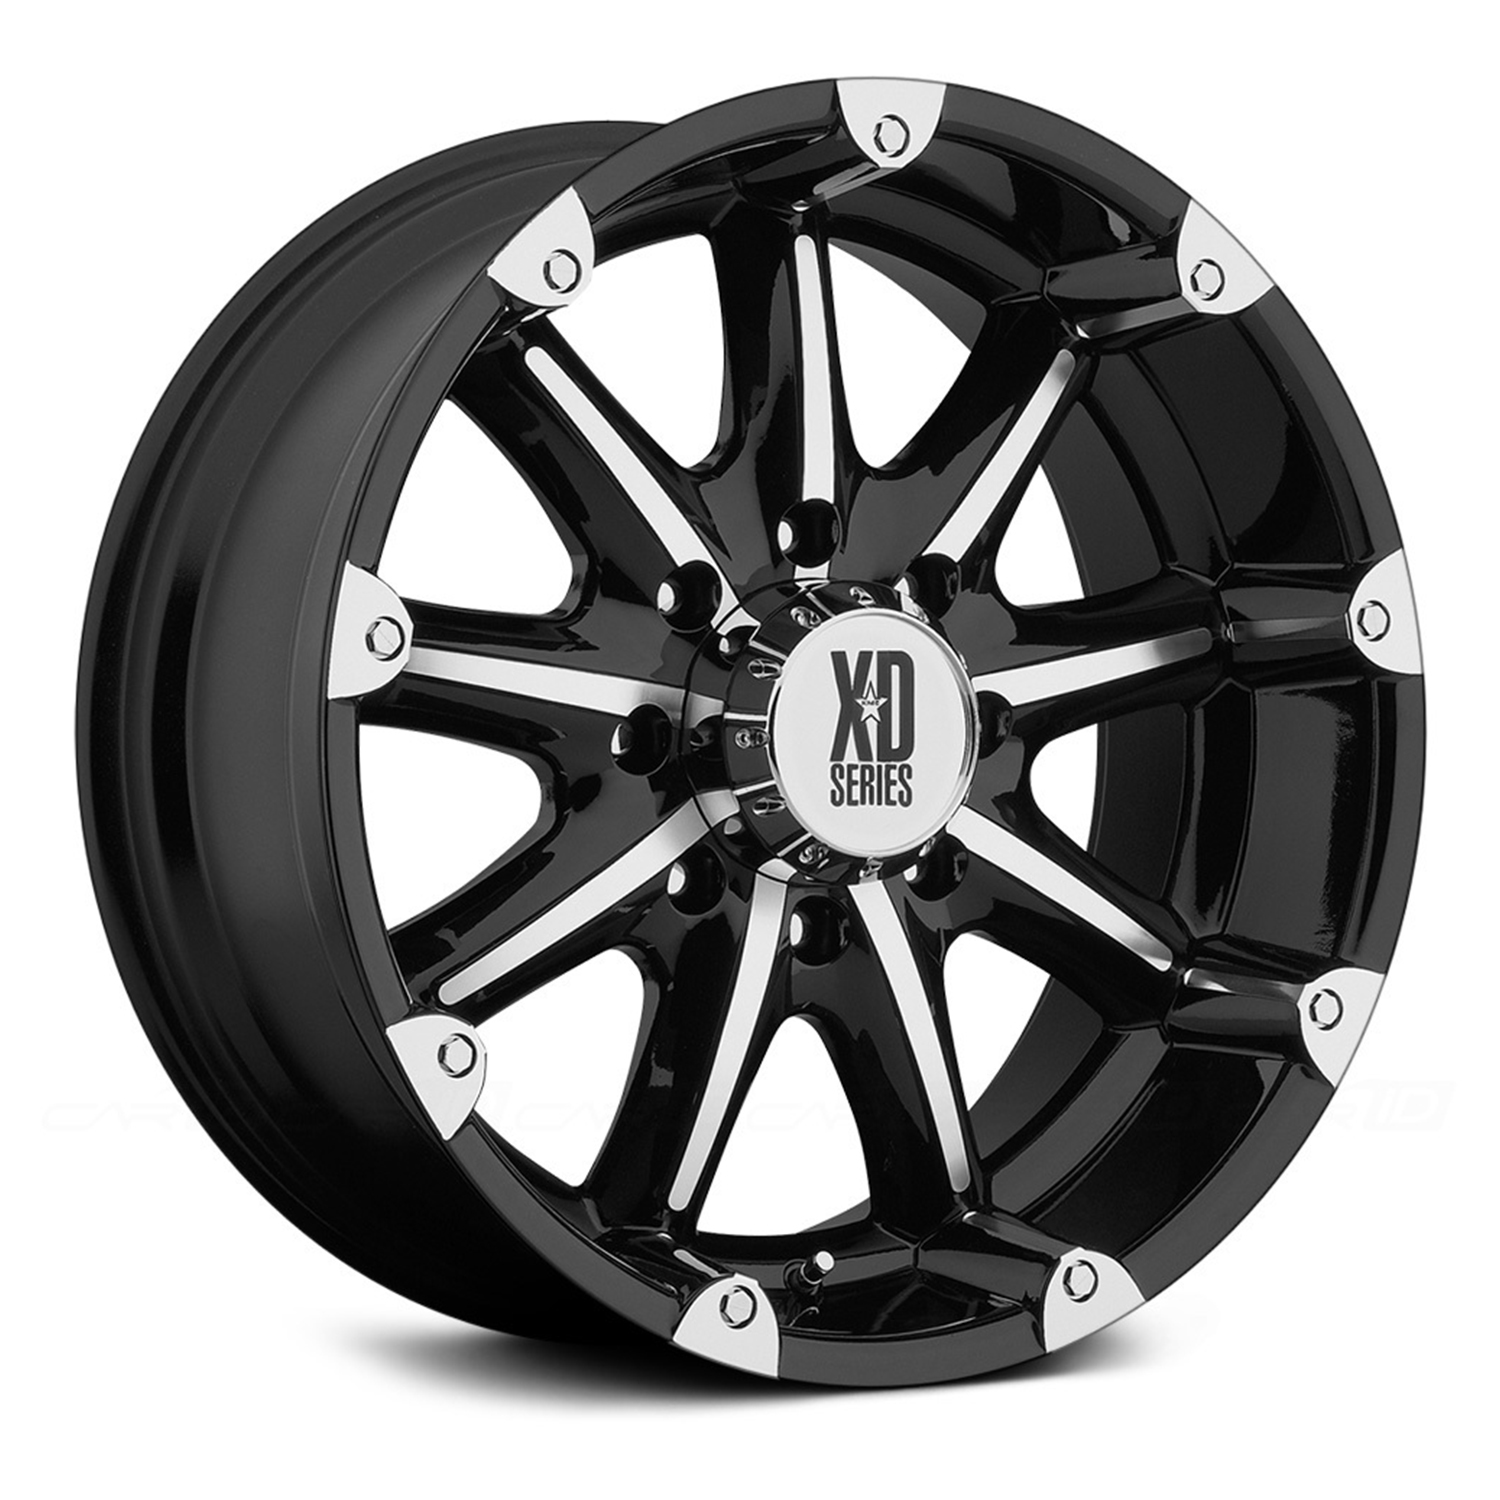 Xd Series Badlands 20x9 6x135 18et Gloss Black Machined wheel